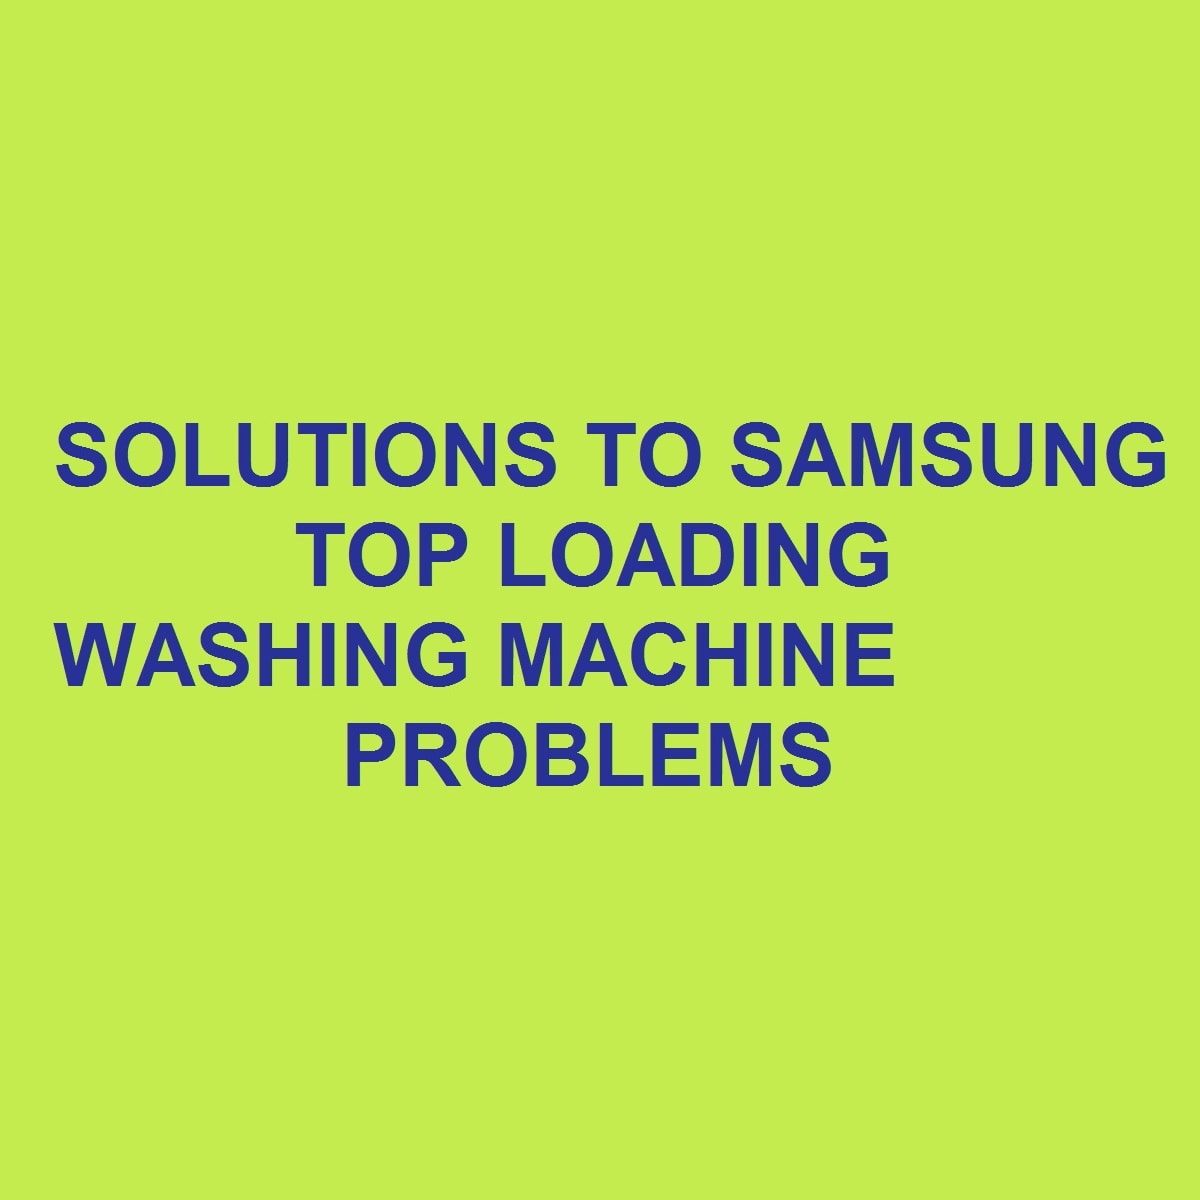 Samsung top loader washing machine problems solutions